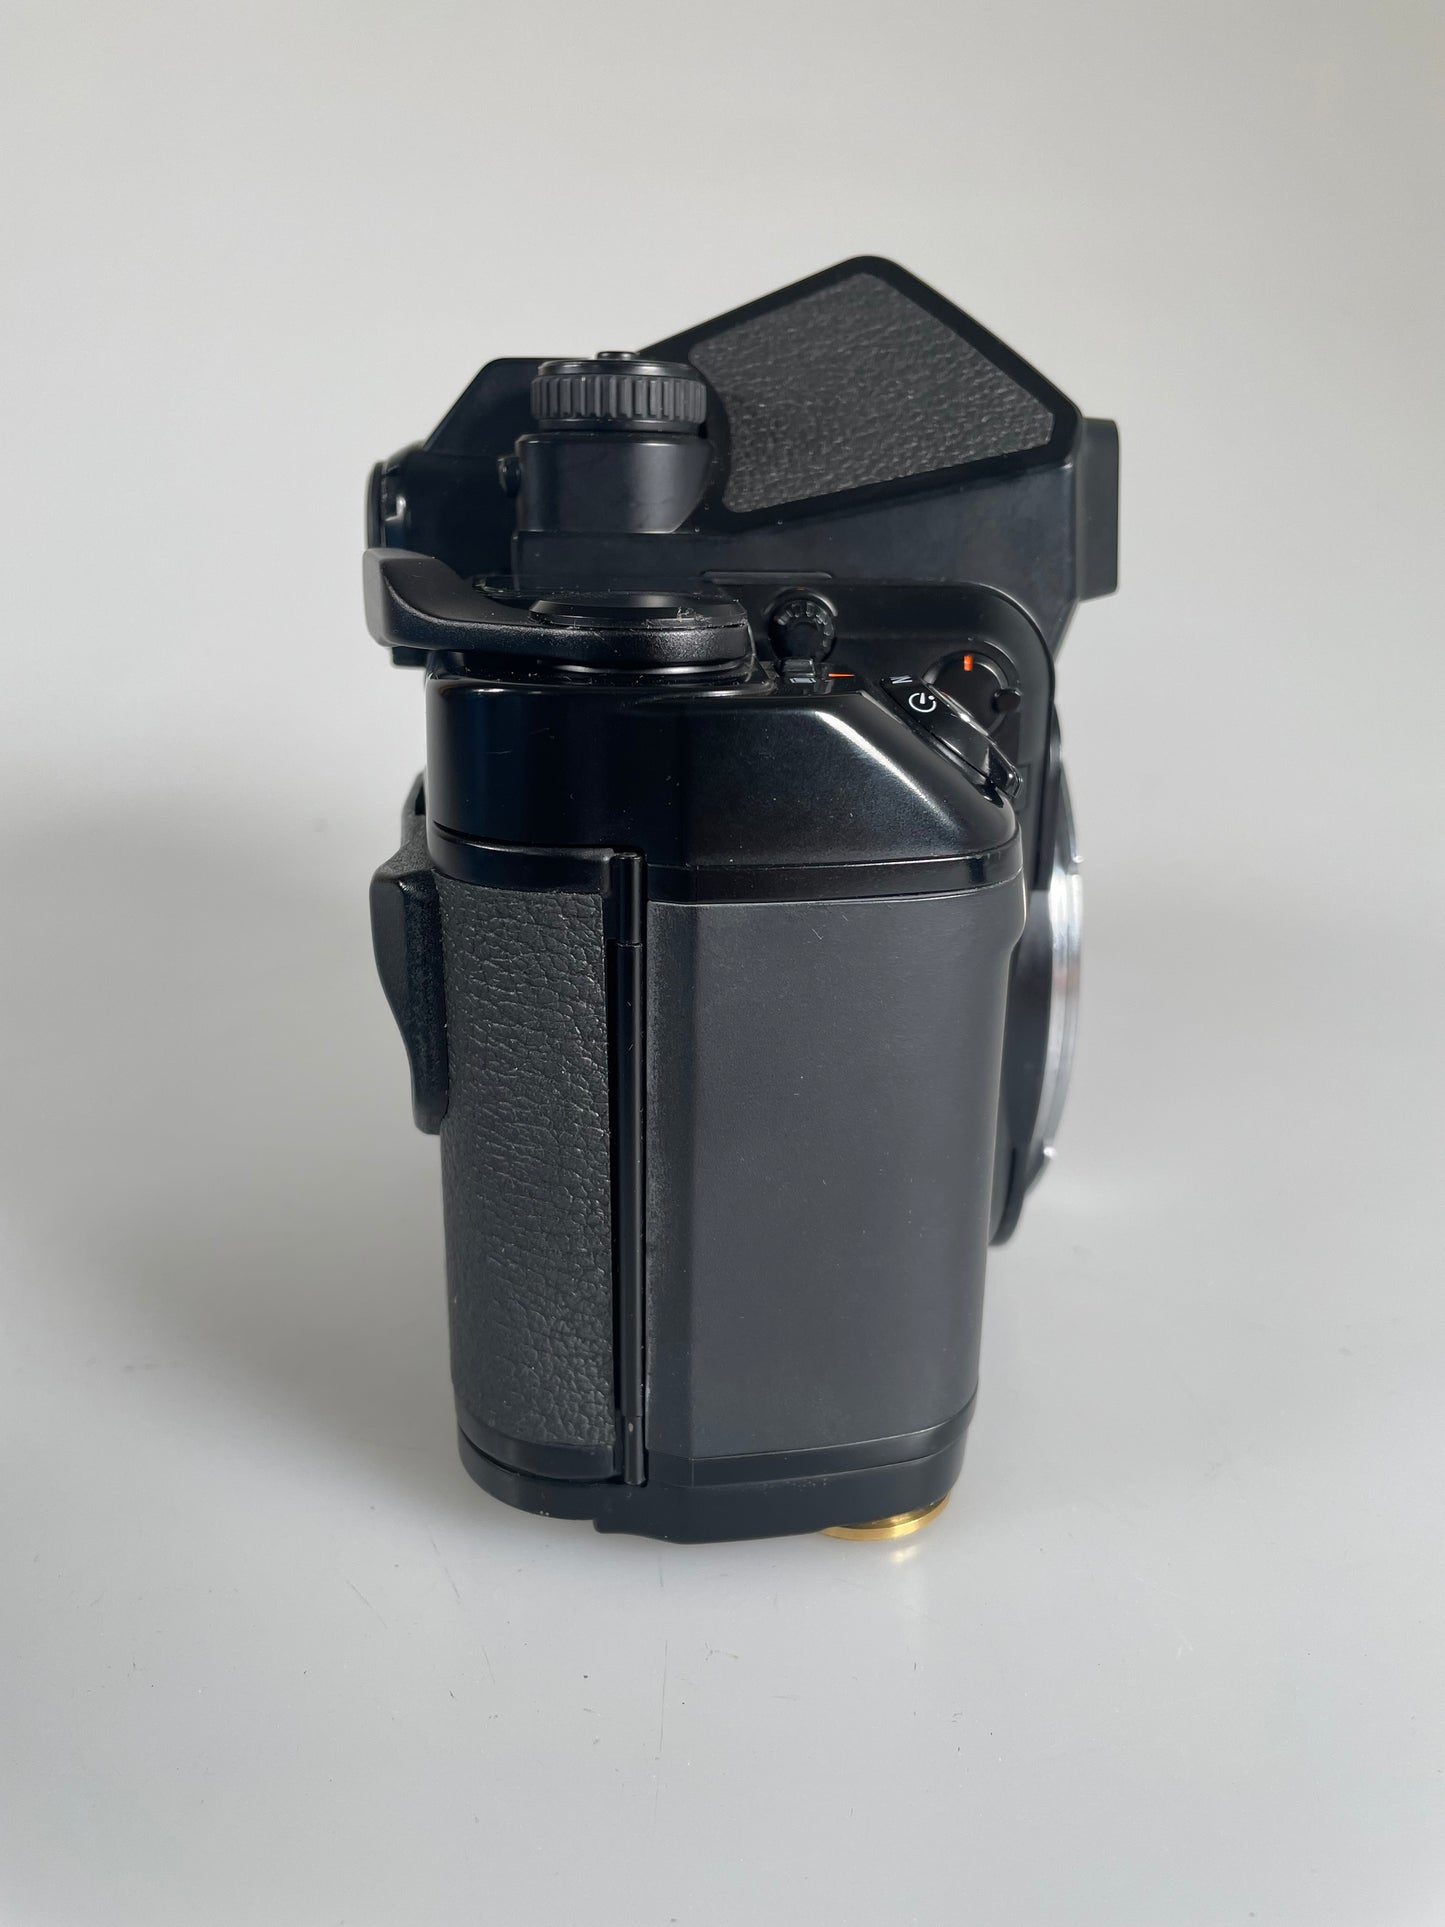 Pentax 67II AE Finder Medium Format Film Camera Body